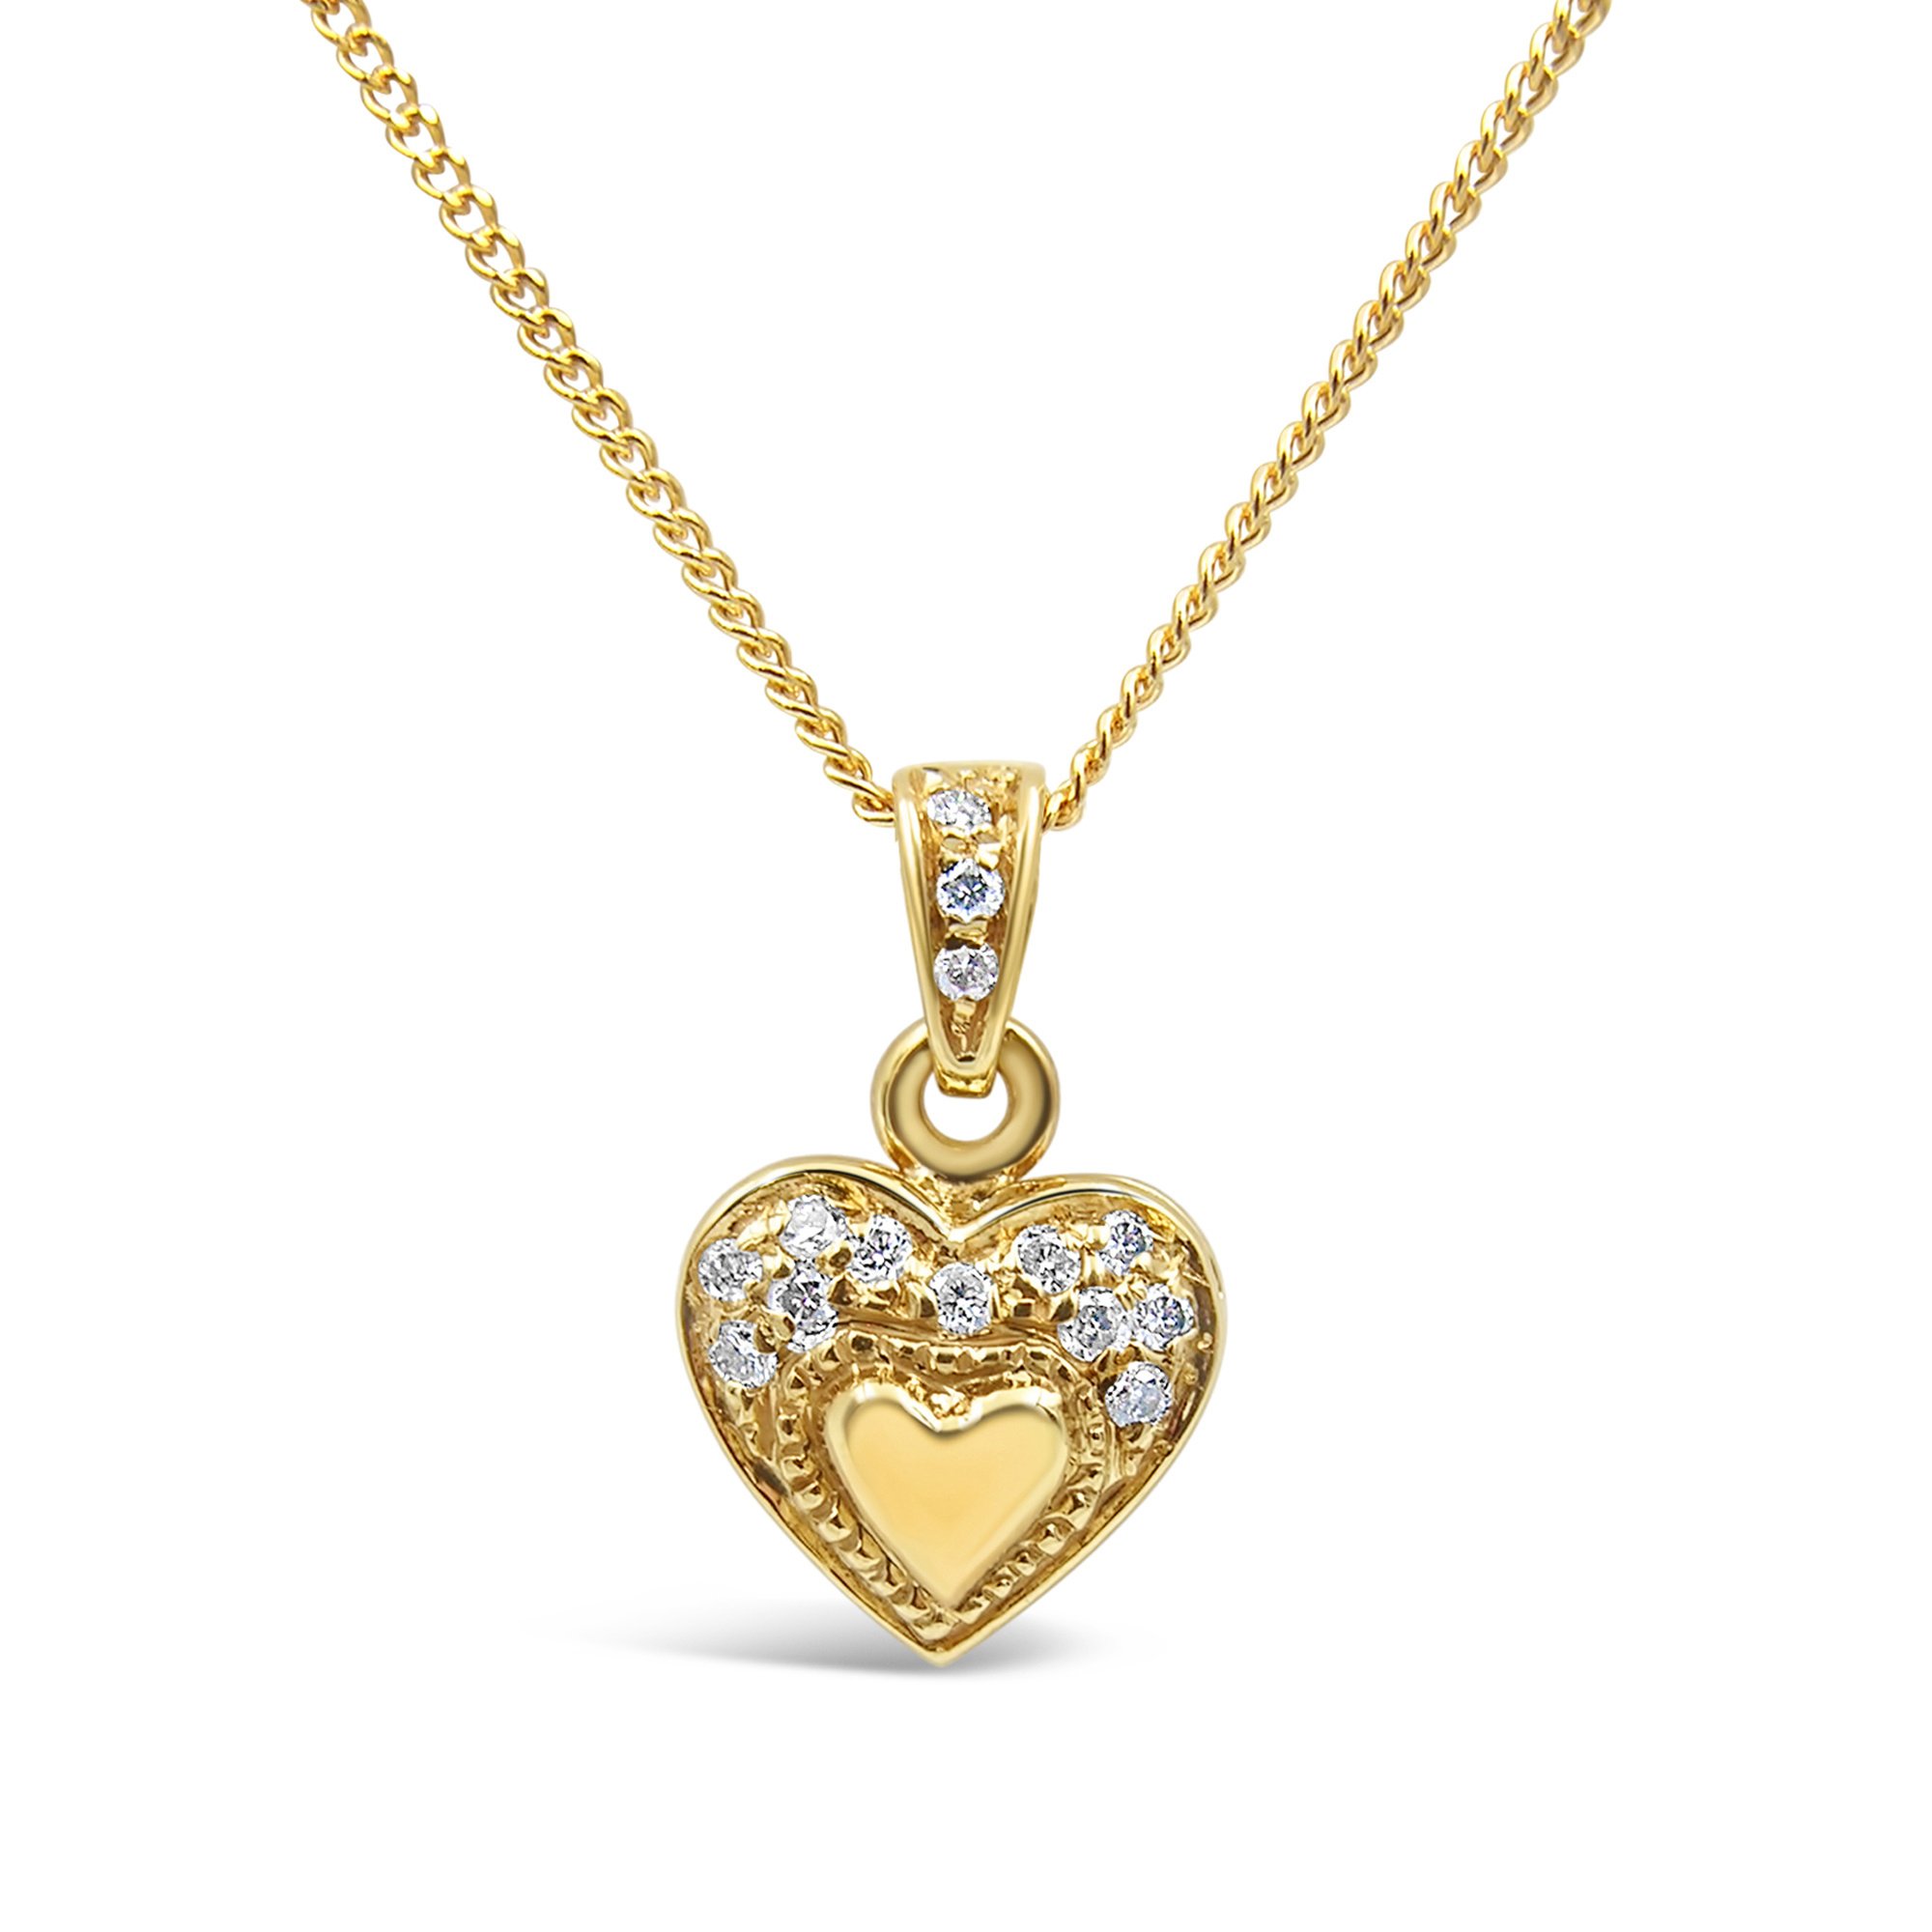 18 karat yellow gold heart pendant with 0.10 ct diamonds